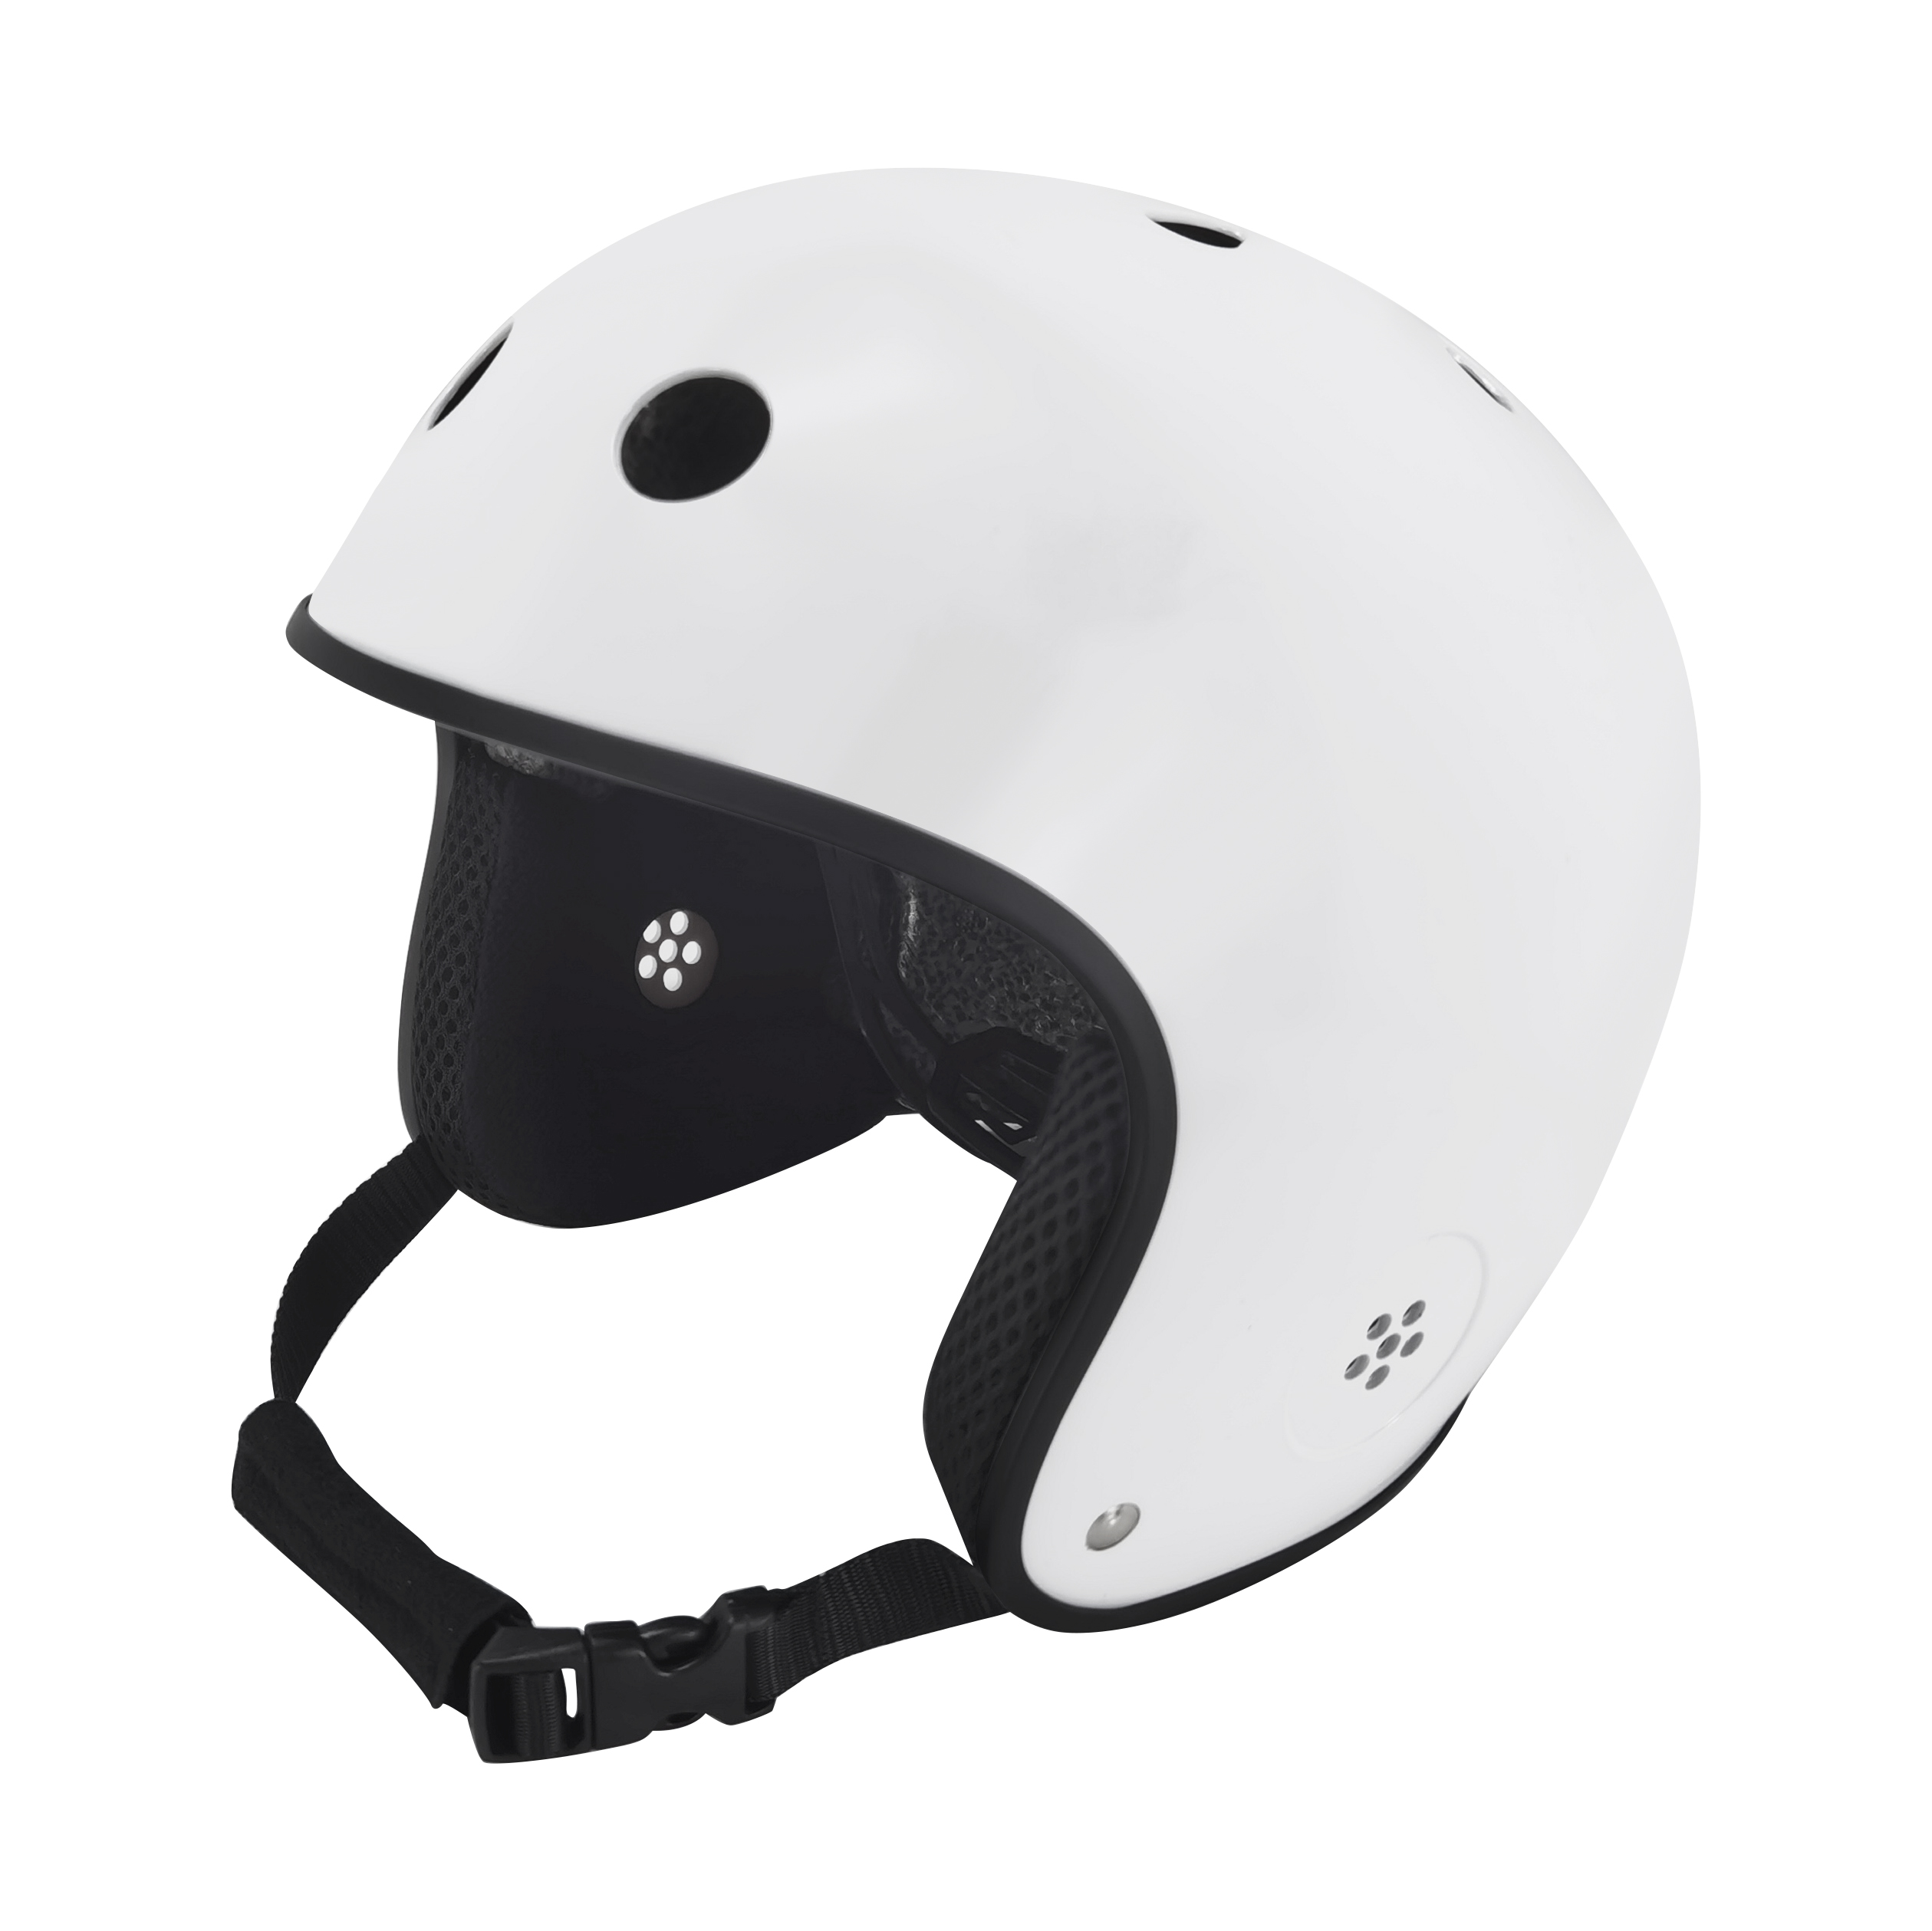 R & D Serviceau-X001와 Aurora 멀티 스포츠 레트로 빈티지 자전거 헬멧